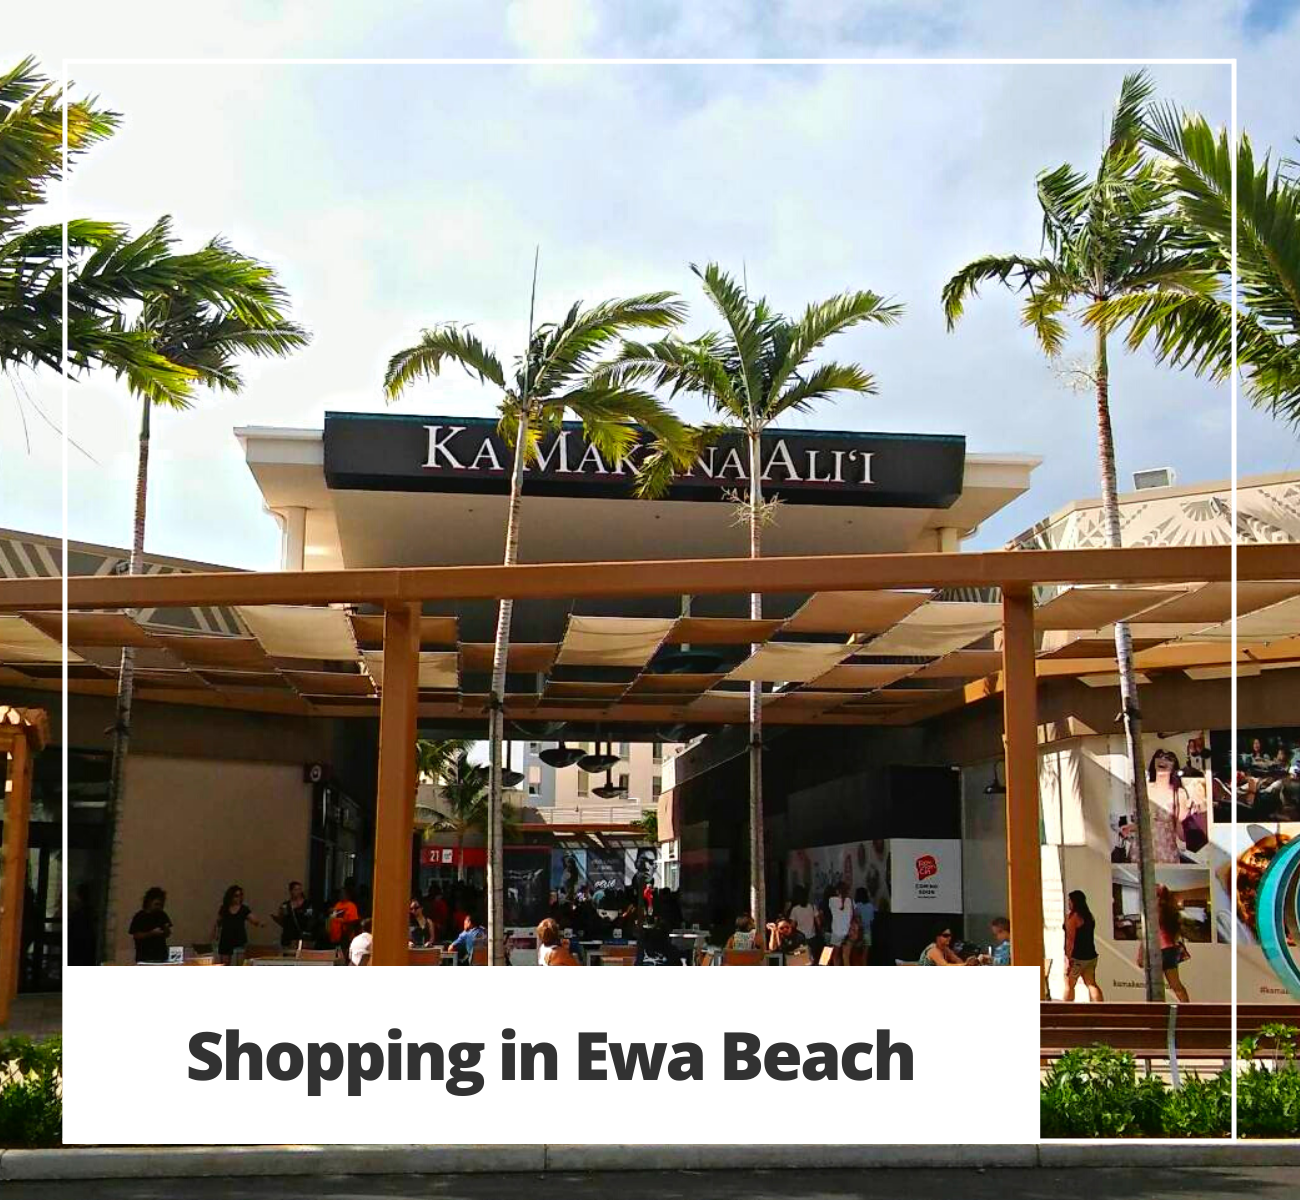 ka makana alii mall, shopping in ewa beach, ewa beach shopping, hawaii shopping, oahu shopping, ewa beach stores, ewa beach pet stores, ewa beach grocery shopping, ewa beach hardware stores